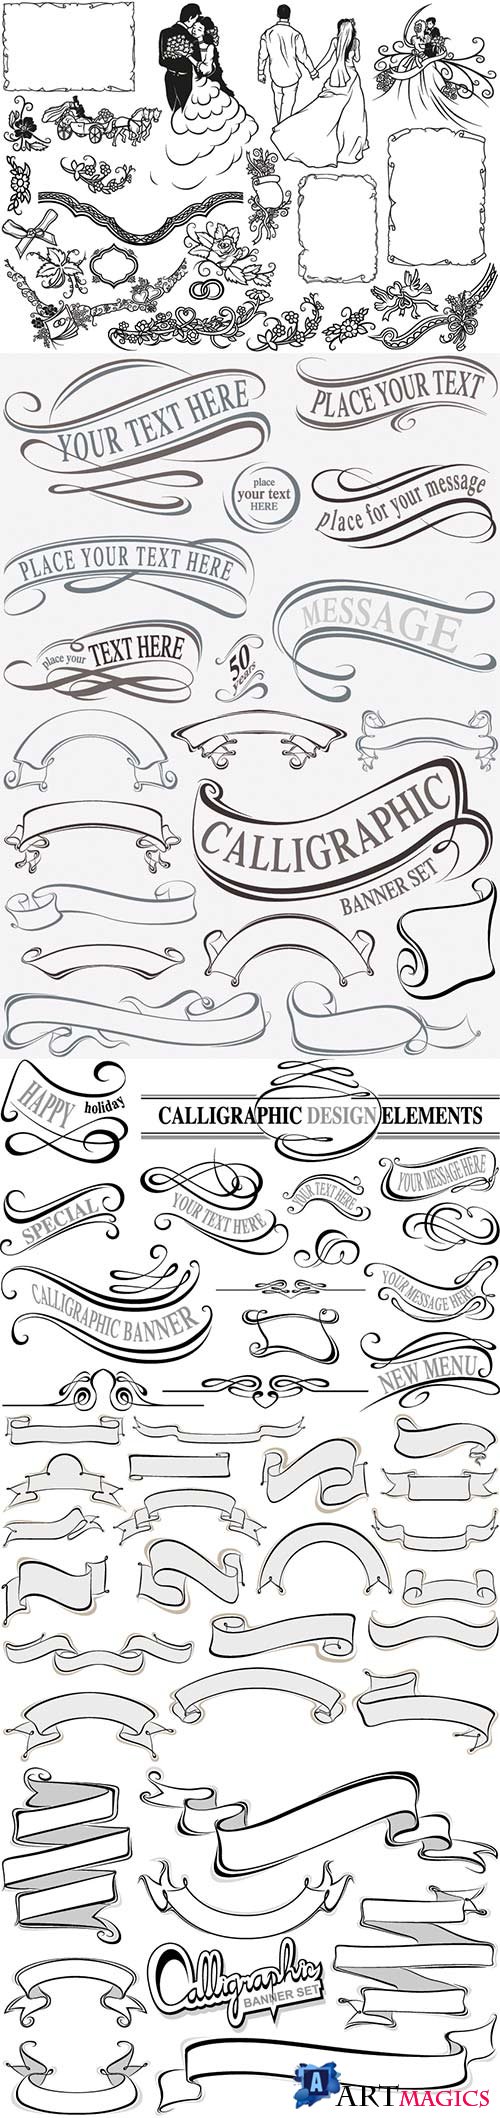 Calligraphic elements collection, design elements illustration